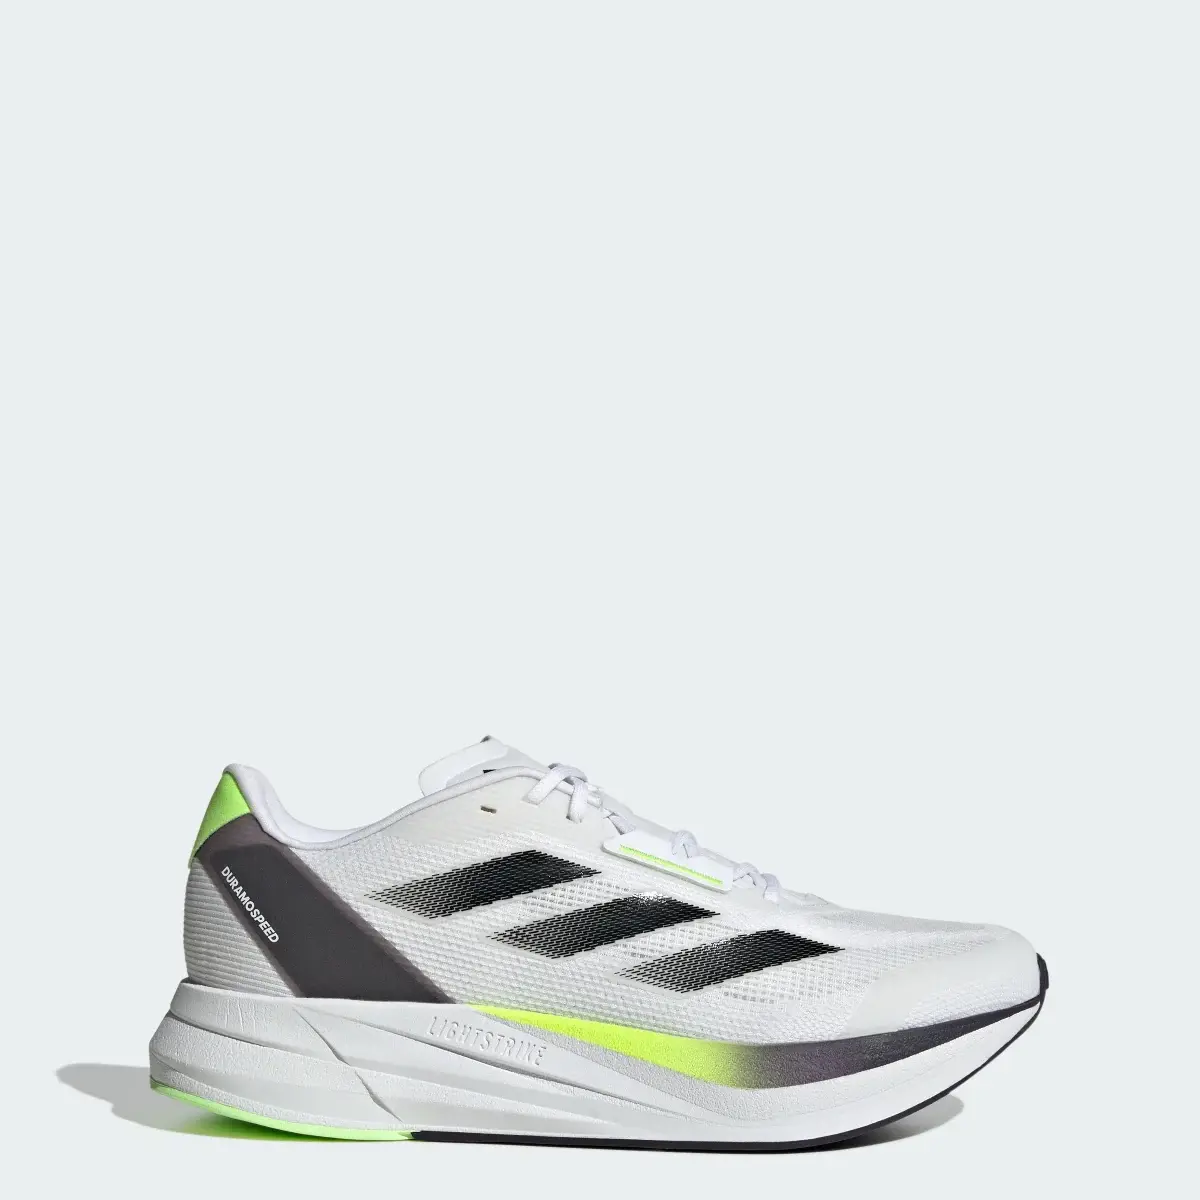 Adidas Duramo Speed Running Shoes. 1